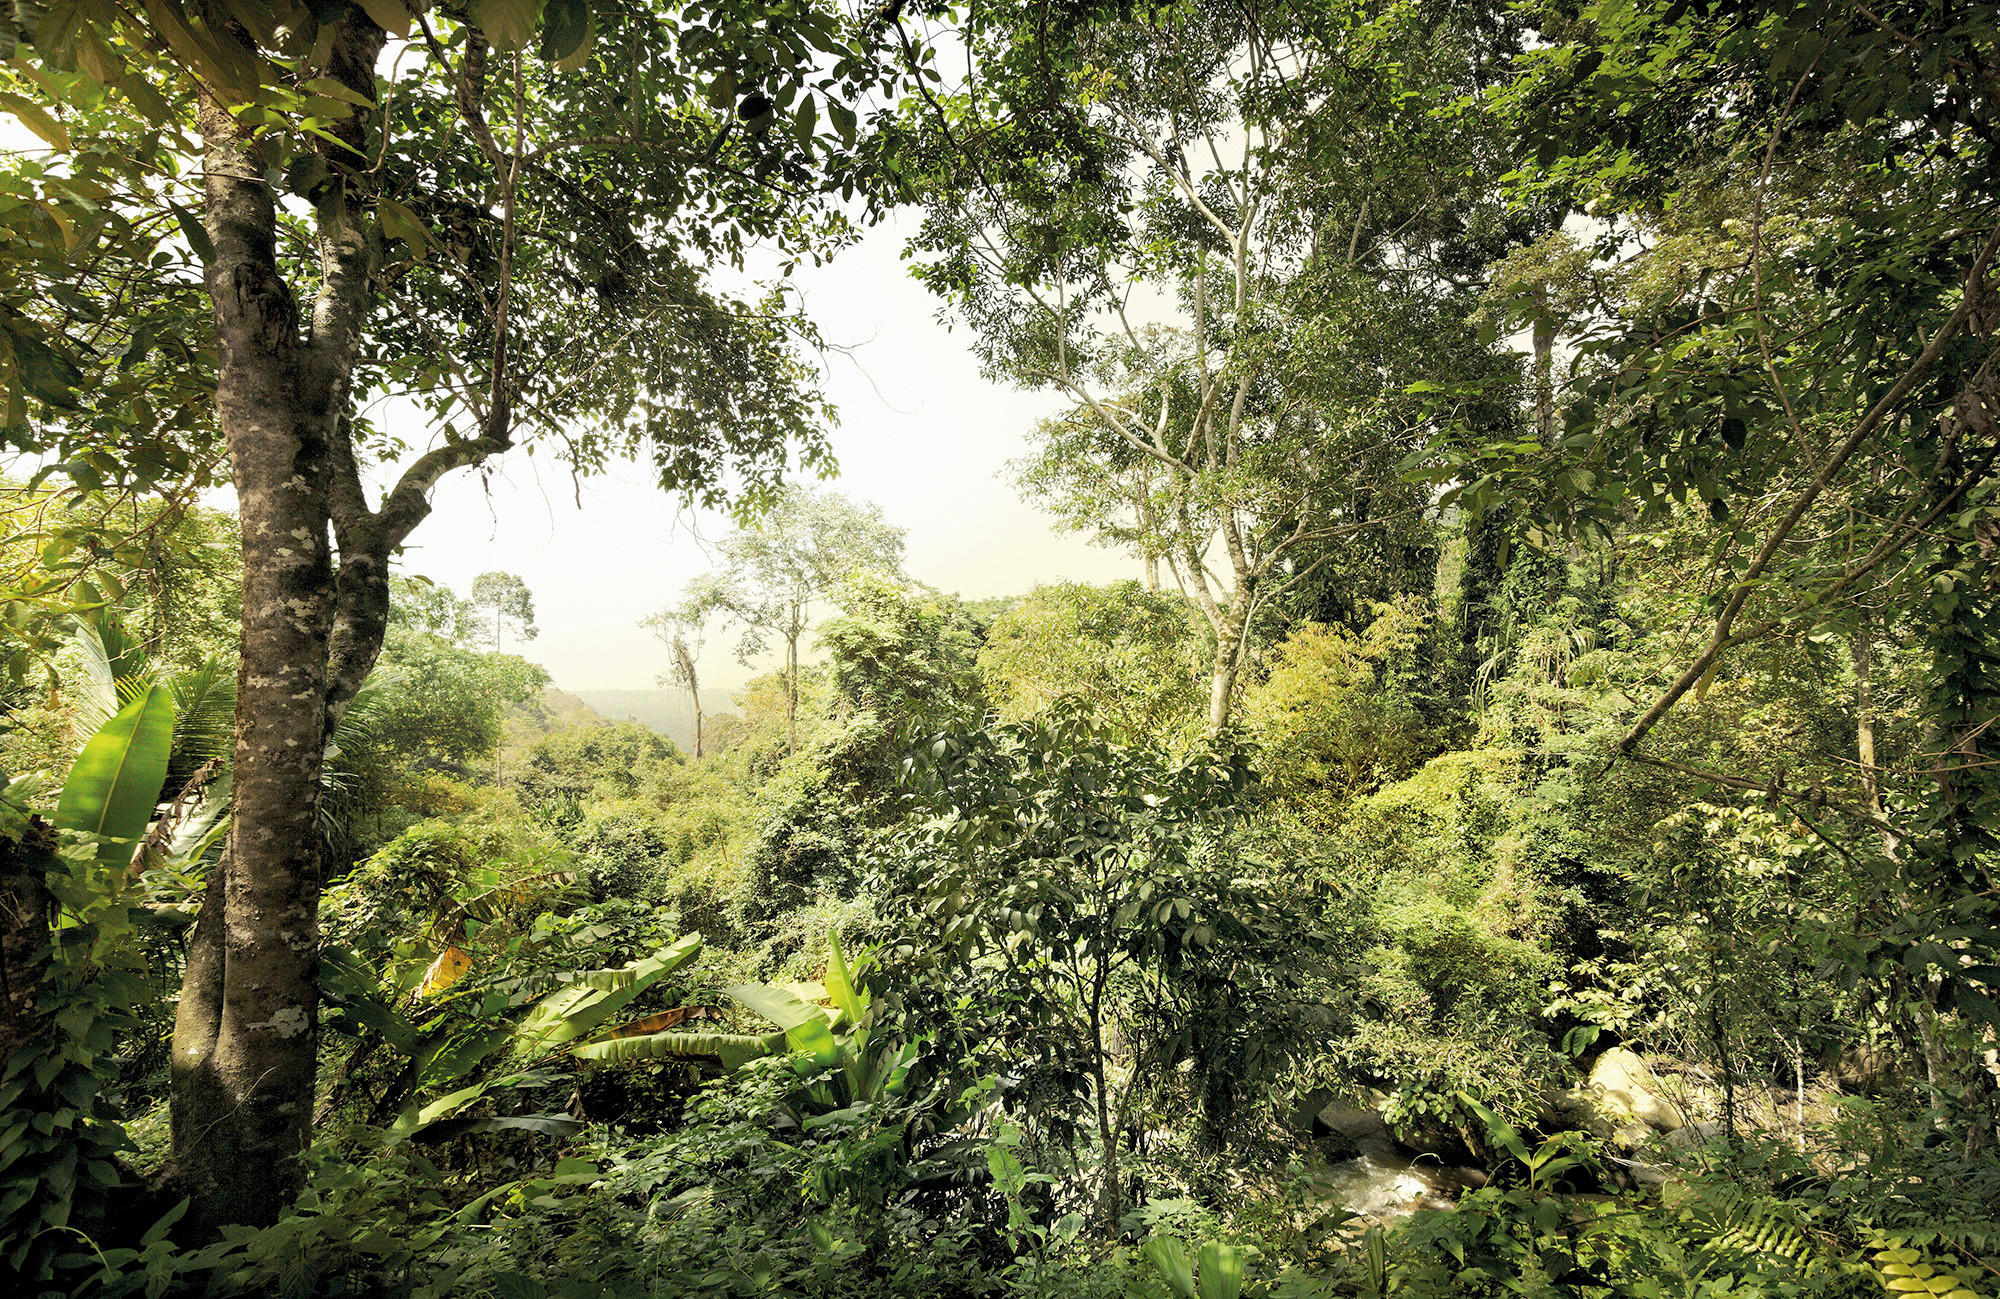 Komar Fototapete Dschungel X8-024 B/H: ca. 400x260 cm